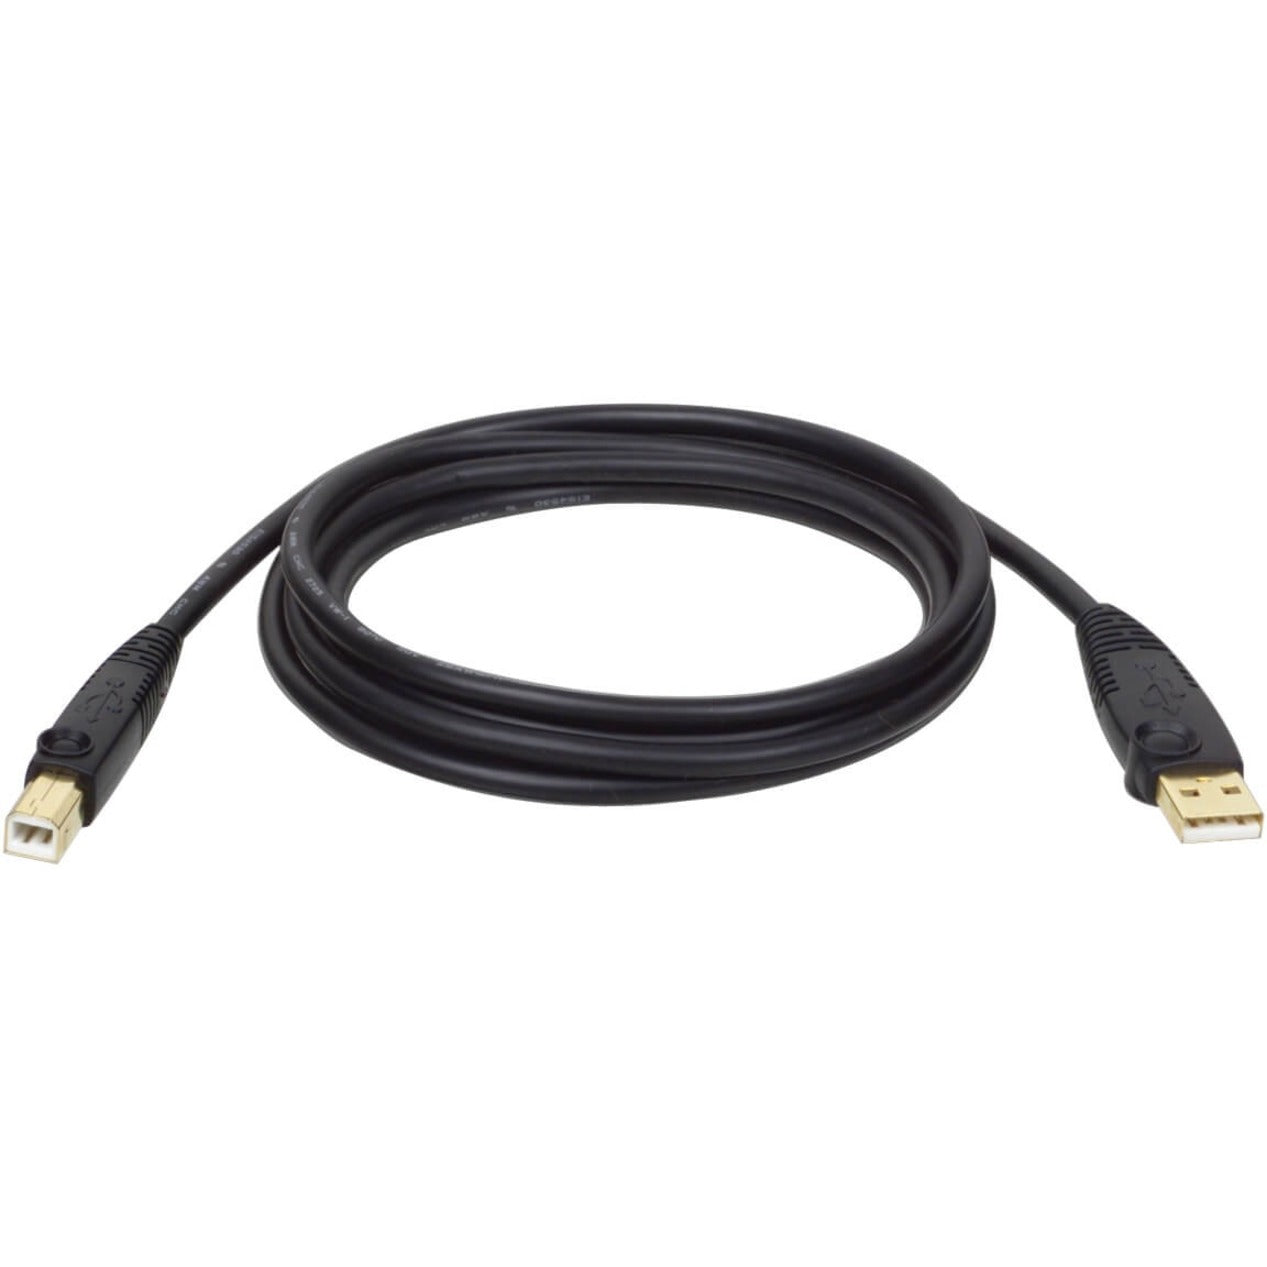 Tripp Lite U022-010 USB 2.0 A/B Cable 10Ft, Black - High-Speed Data Transfer